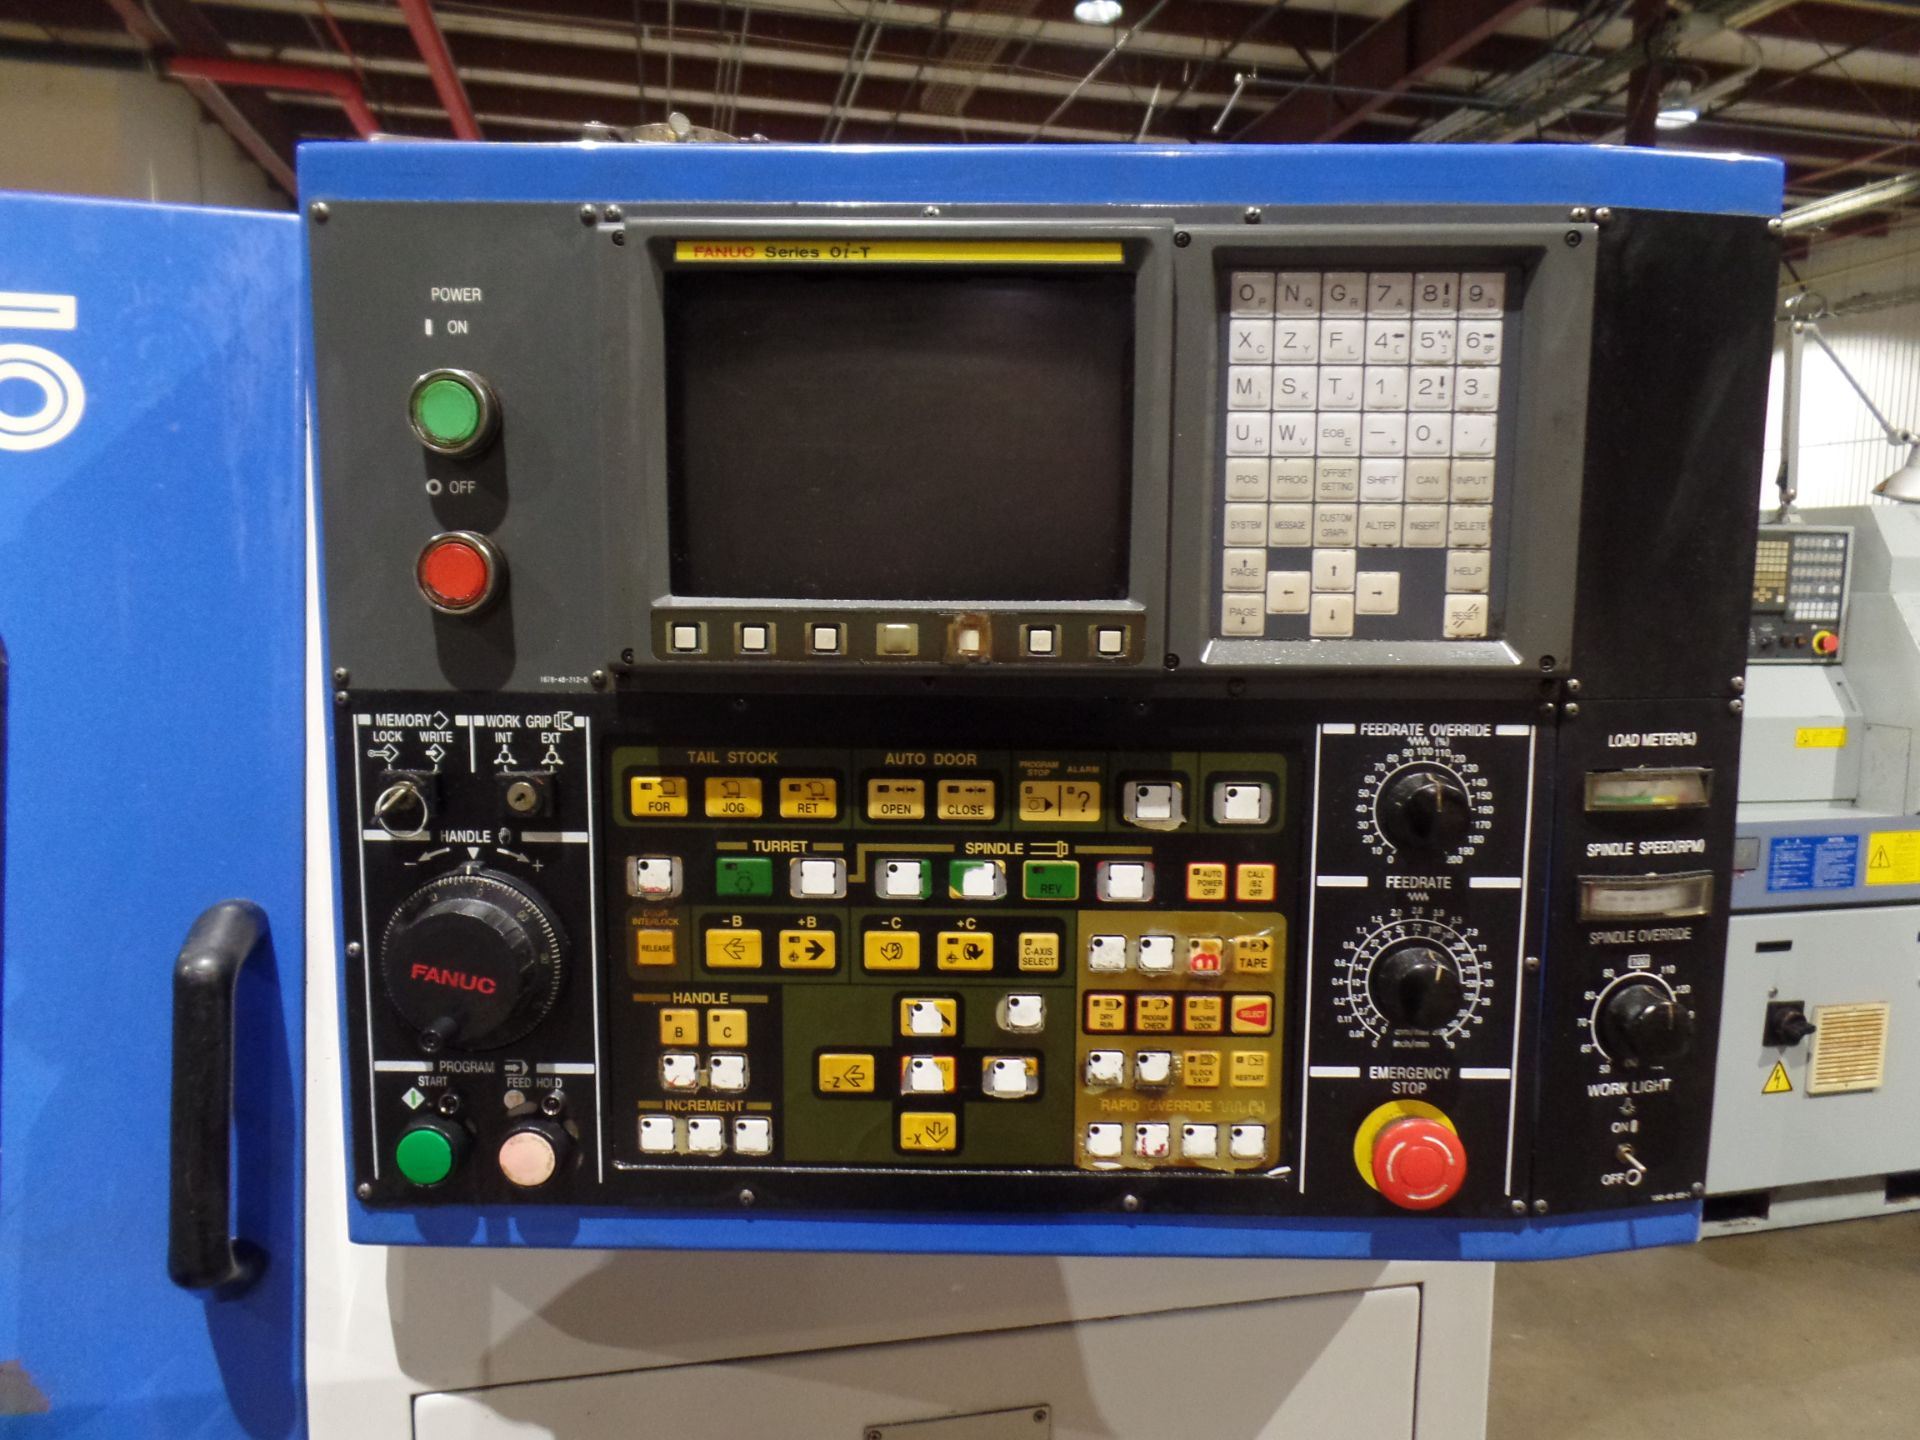 Kia 450 CNC Turning Center Oi-T Control, New 2003 - Image 6 of 7